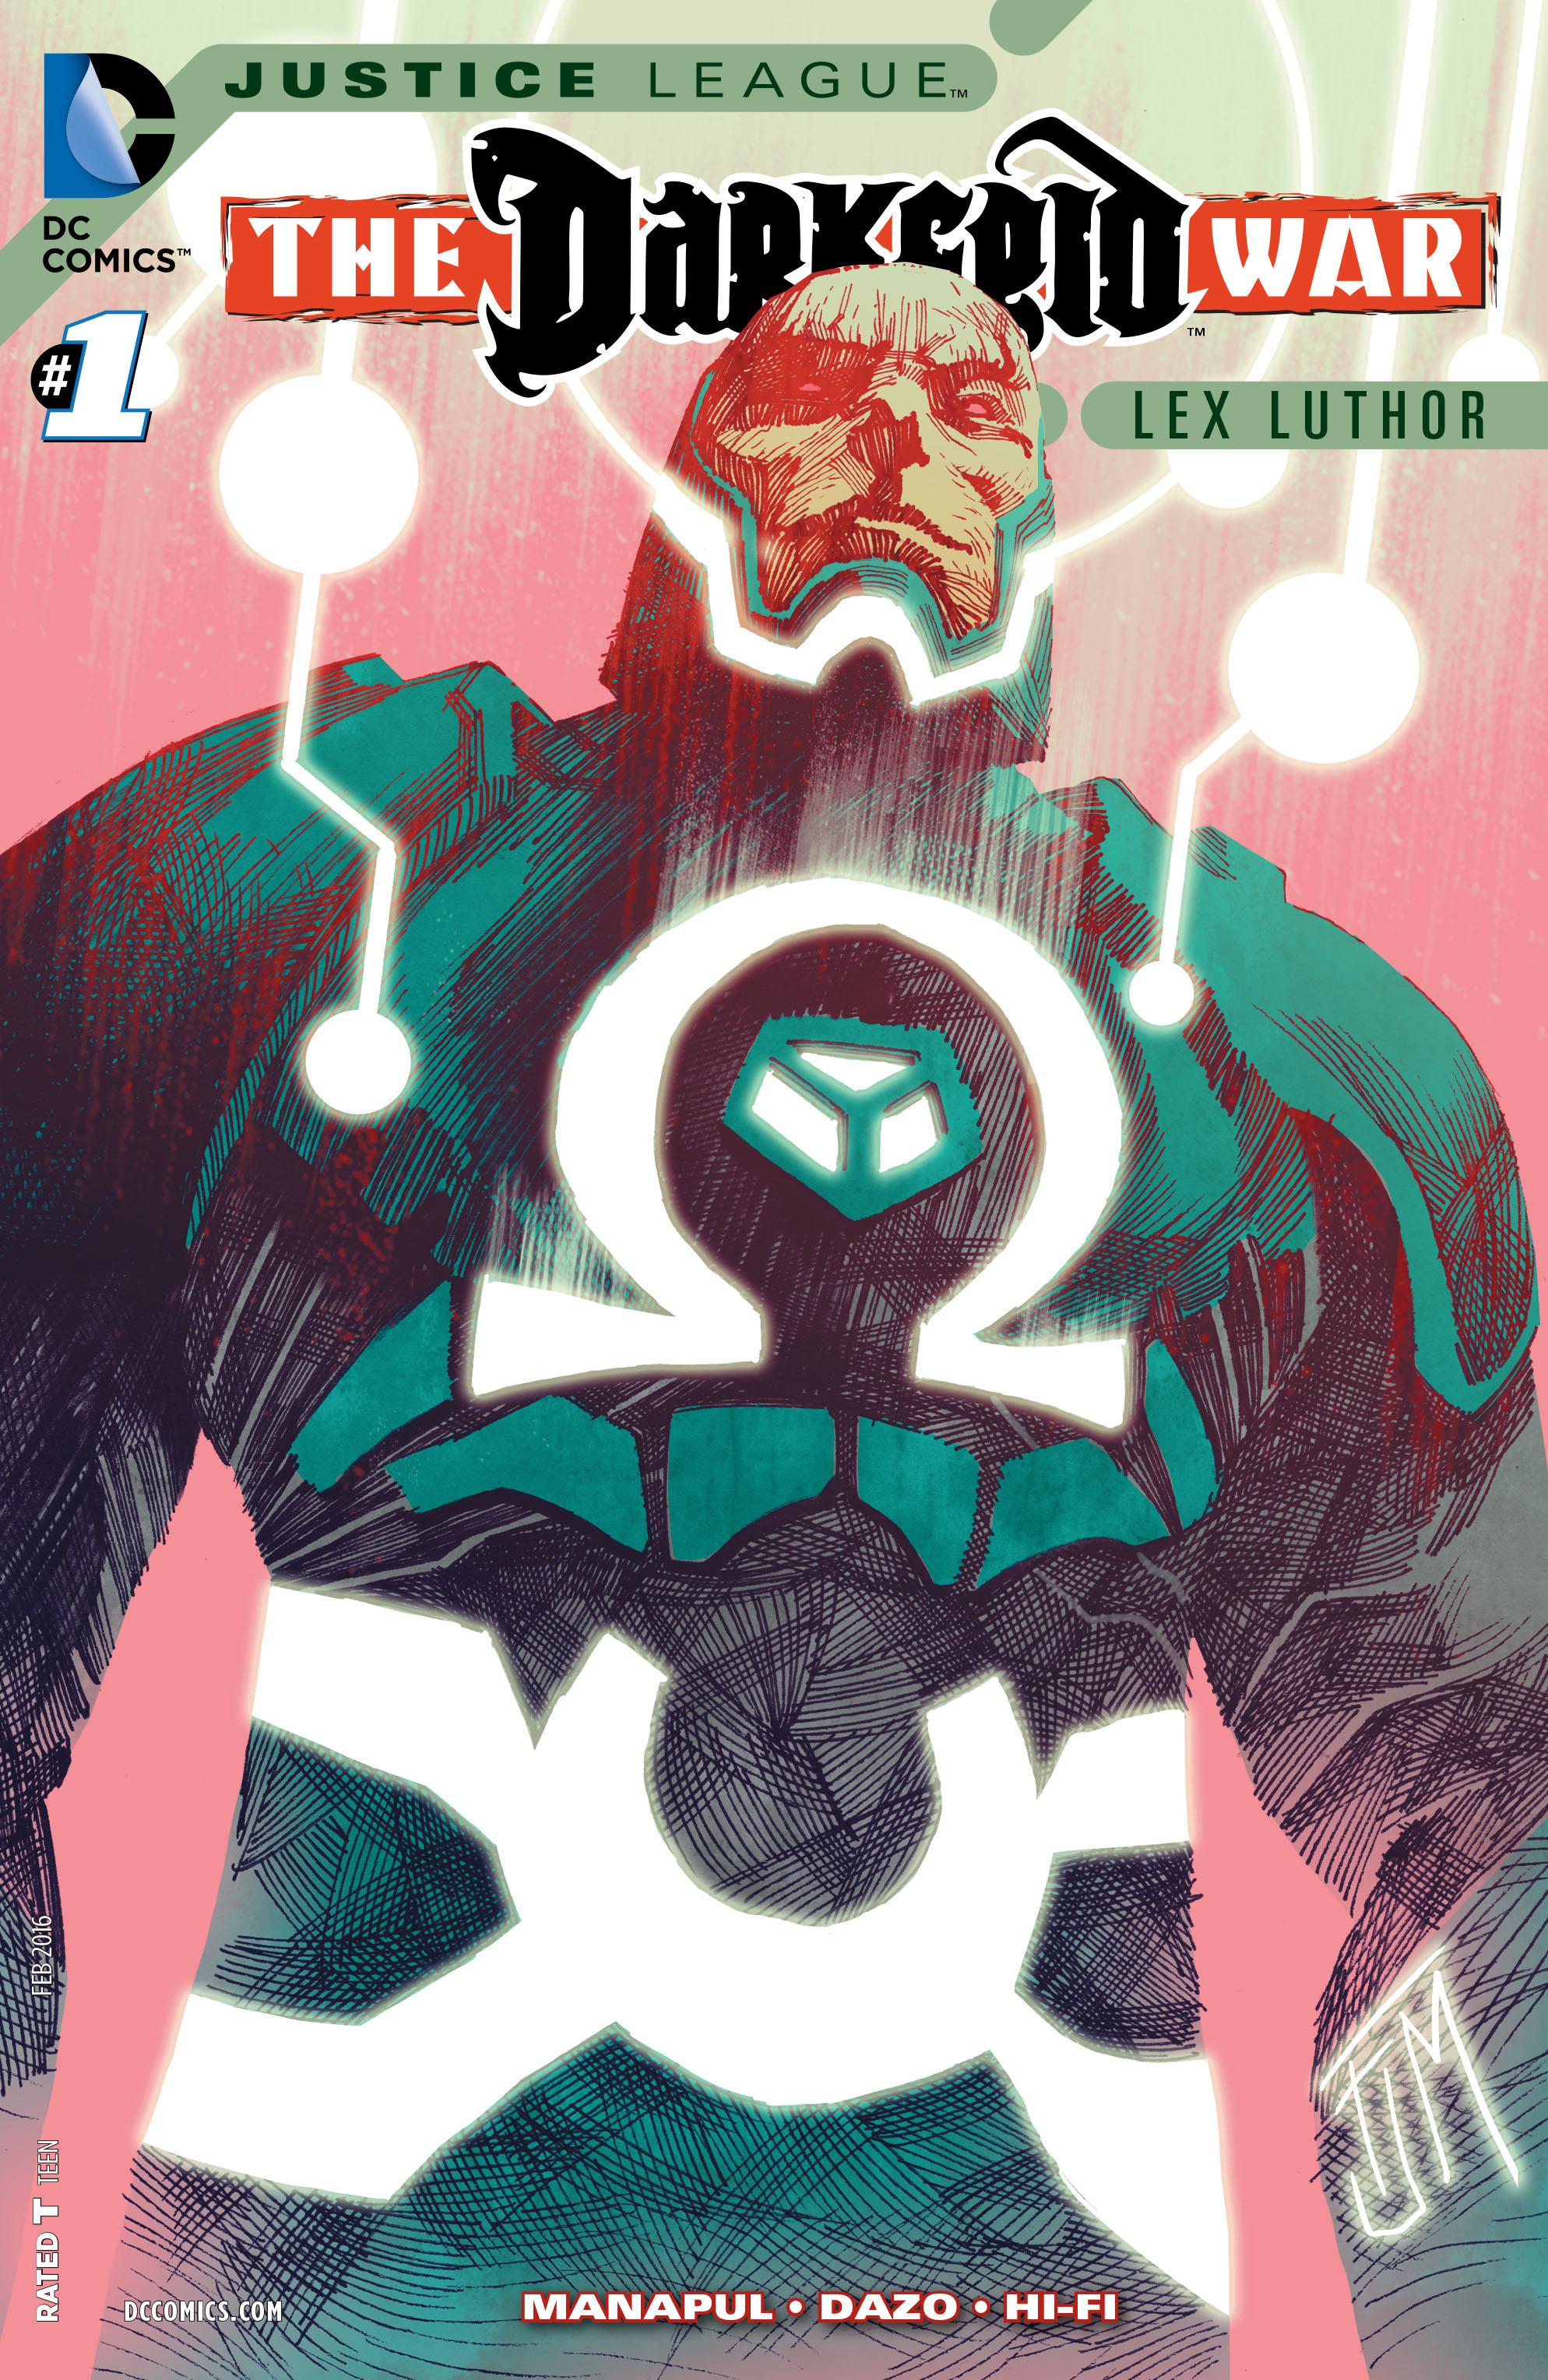 Justice League: Darkseid War: Lex Luthor Vol. 1 #1